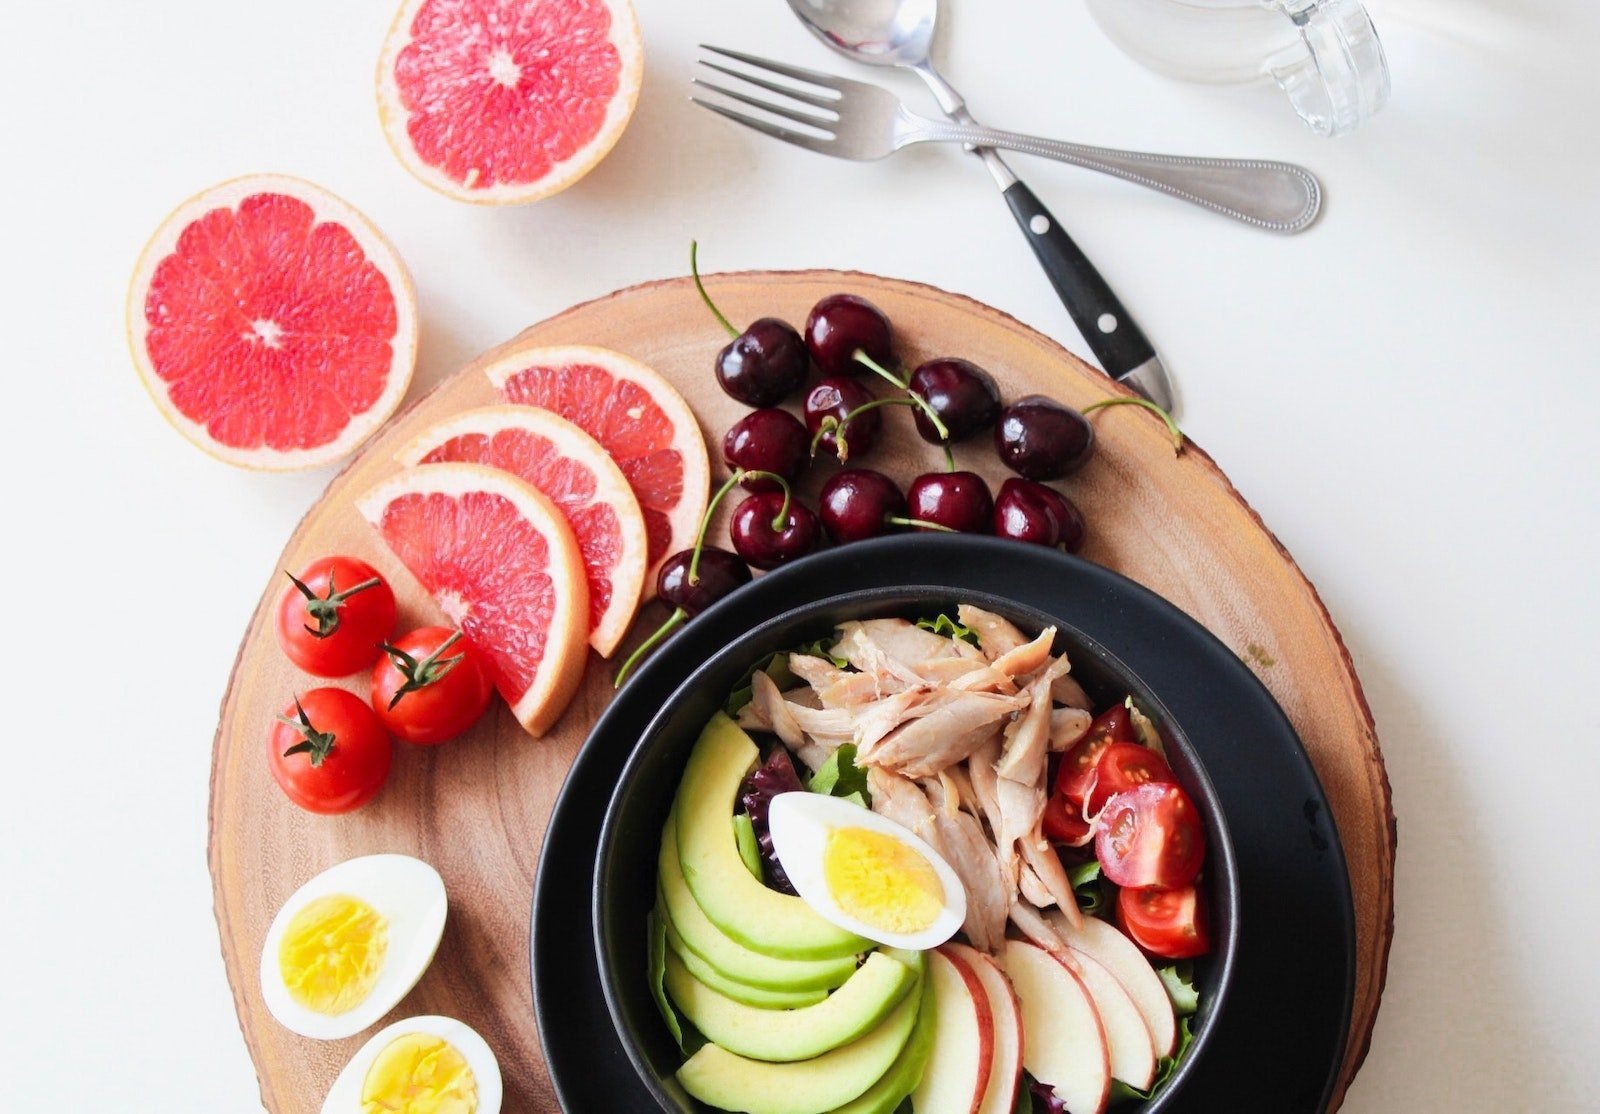 Bowl of Vegetable Salad and Sliced Fruits